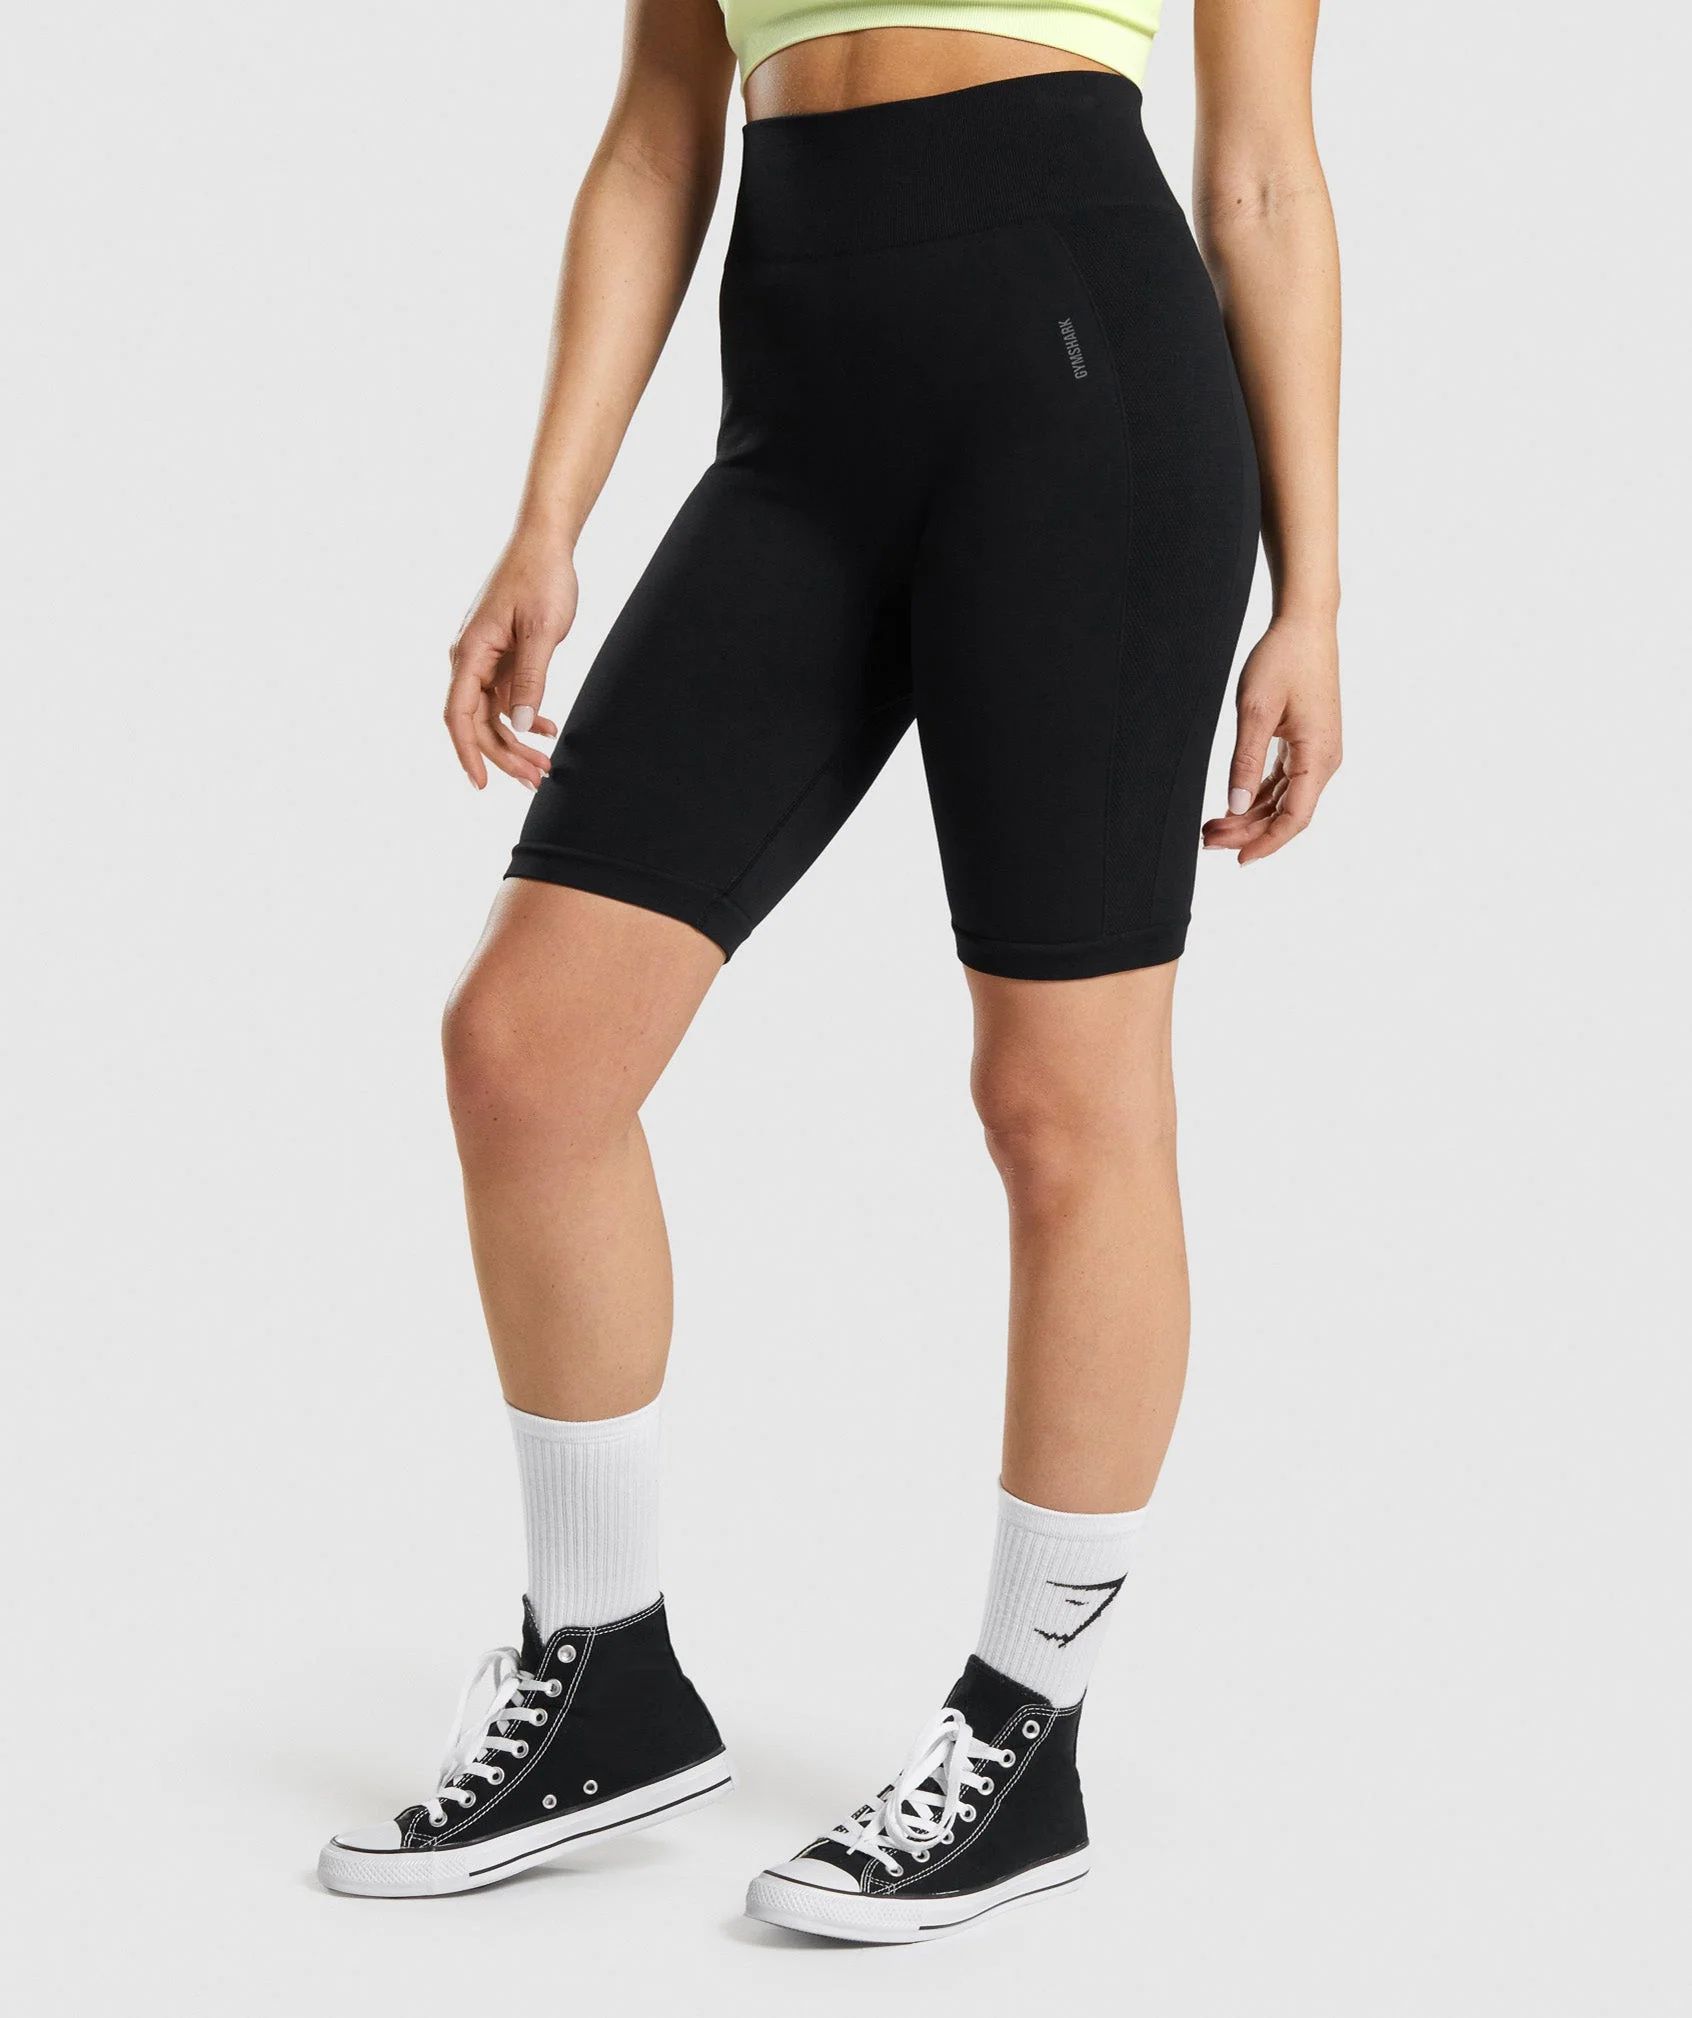 Gymshark Flex Cycling Shorts - Black/Charcoal | Gymshark US